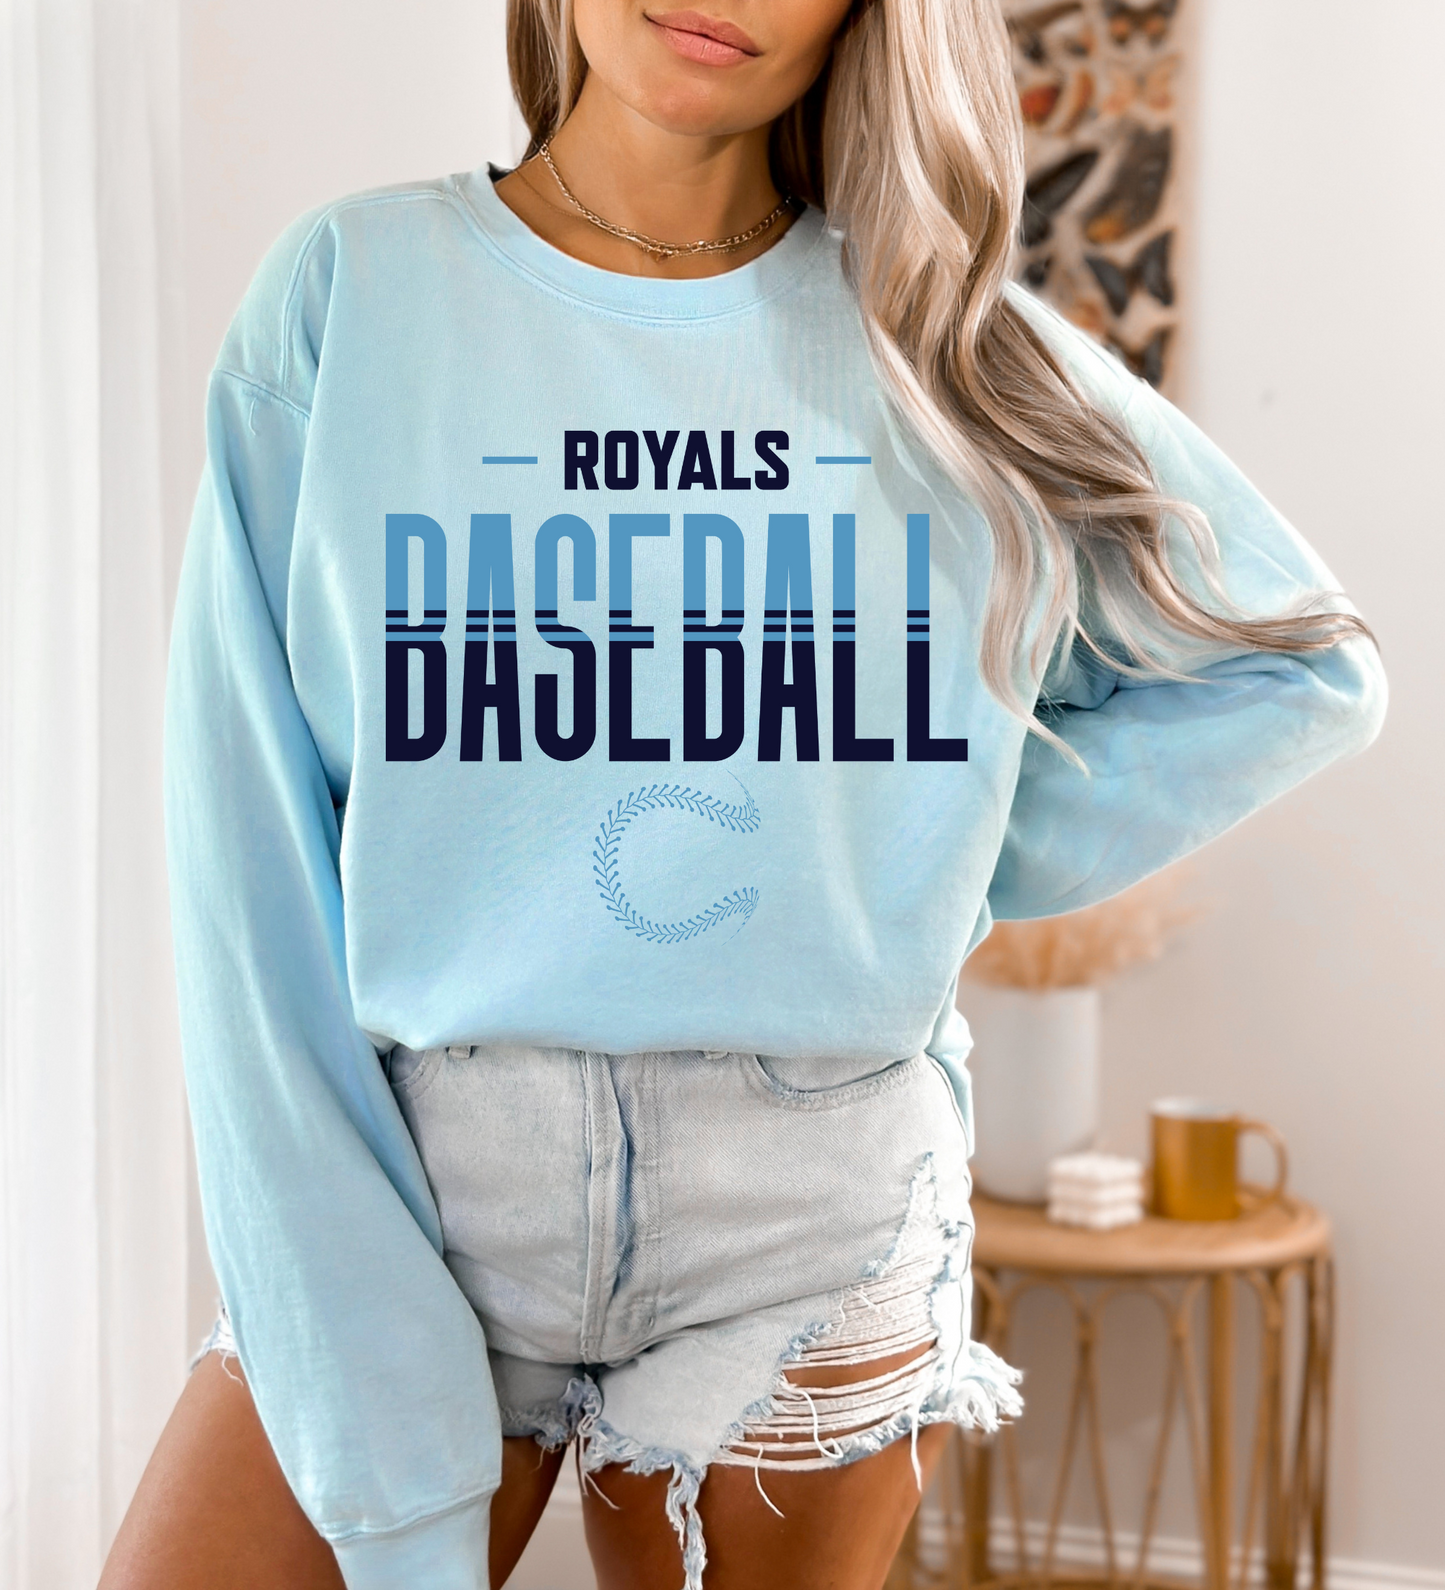 Royals Baseball Double (Comfort Colors)